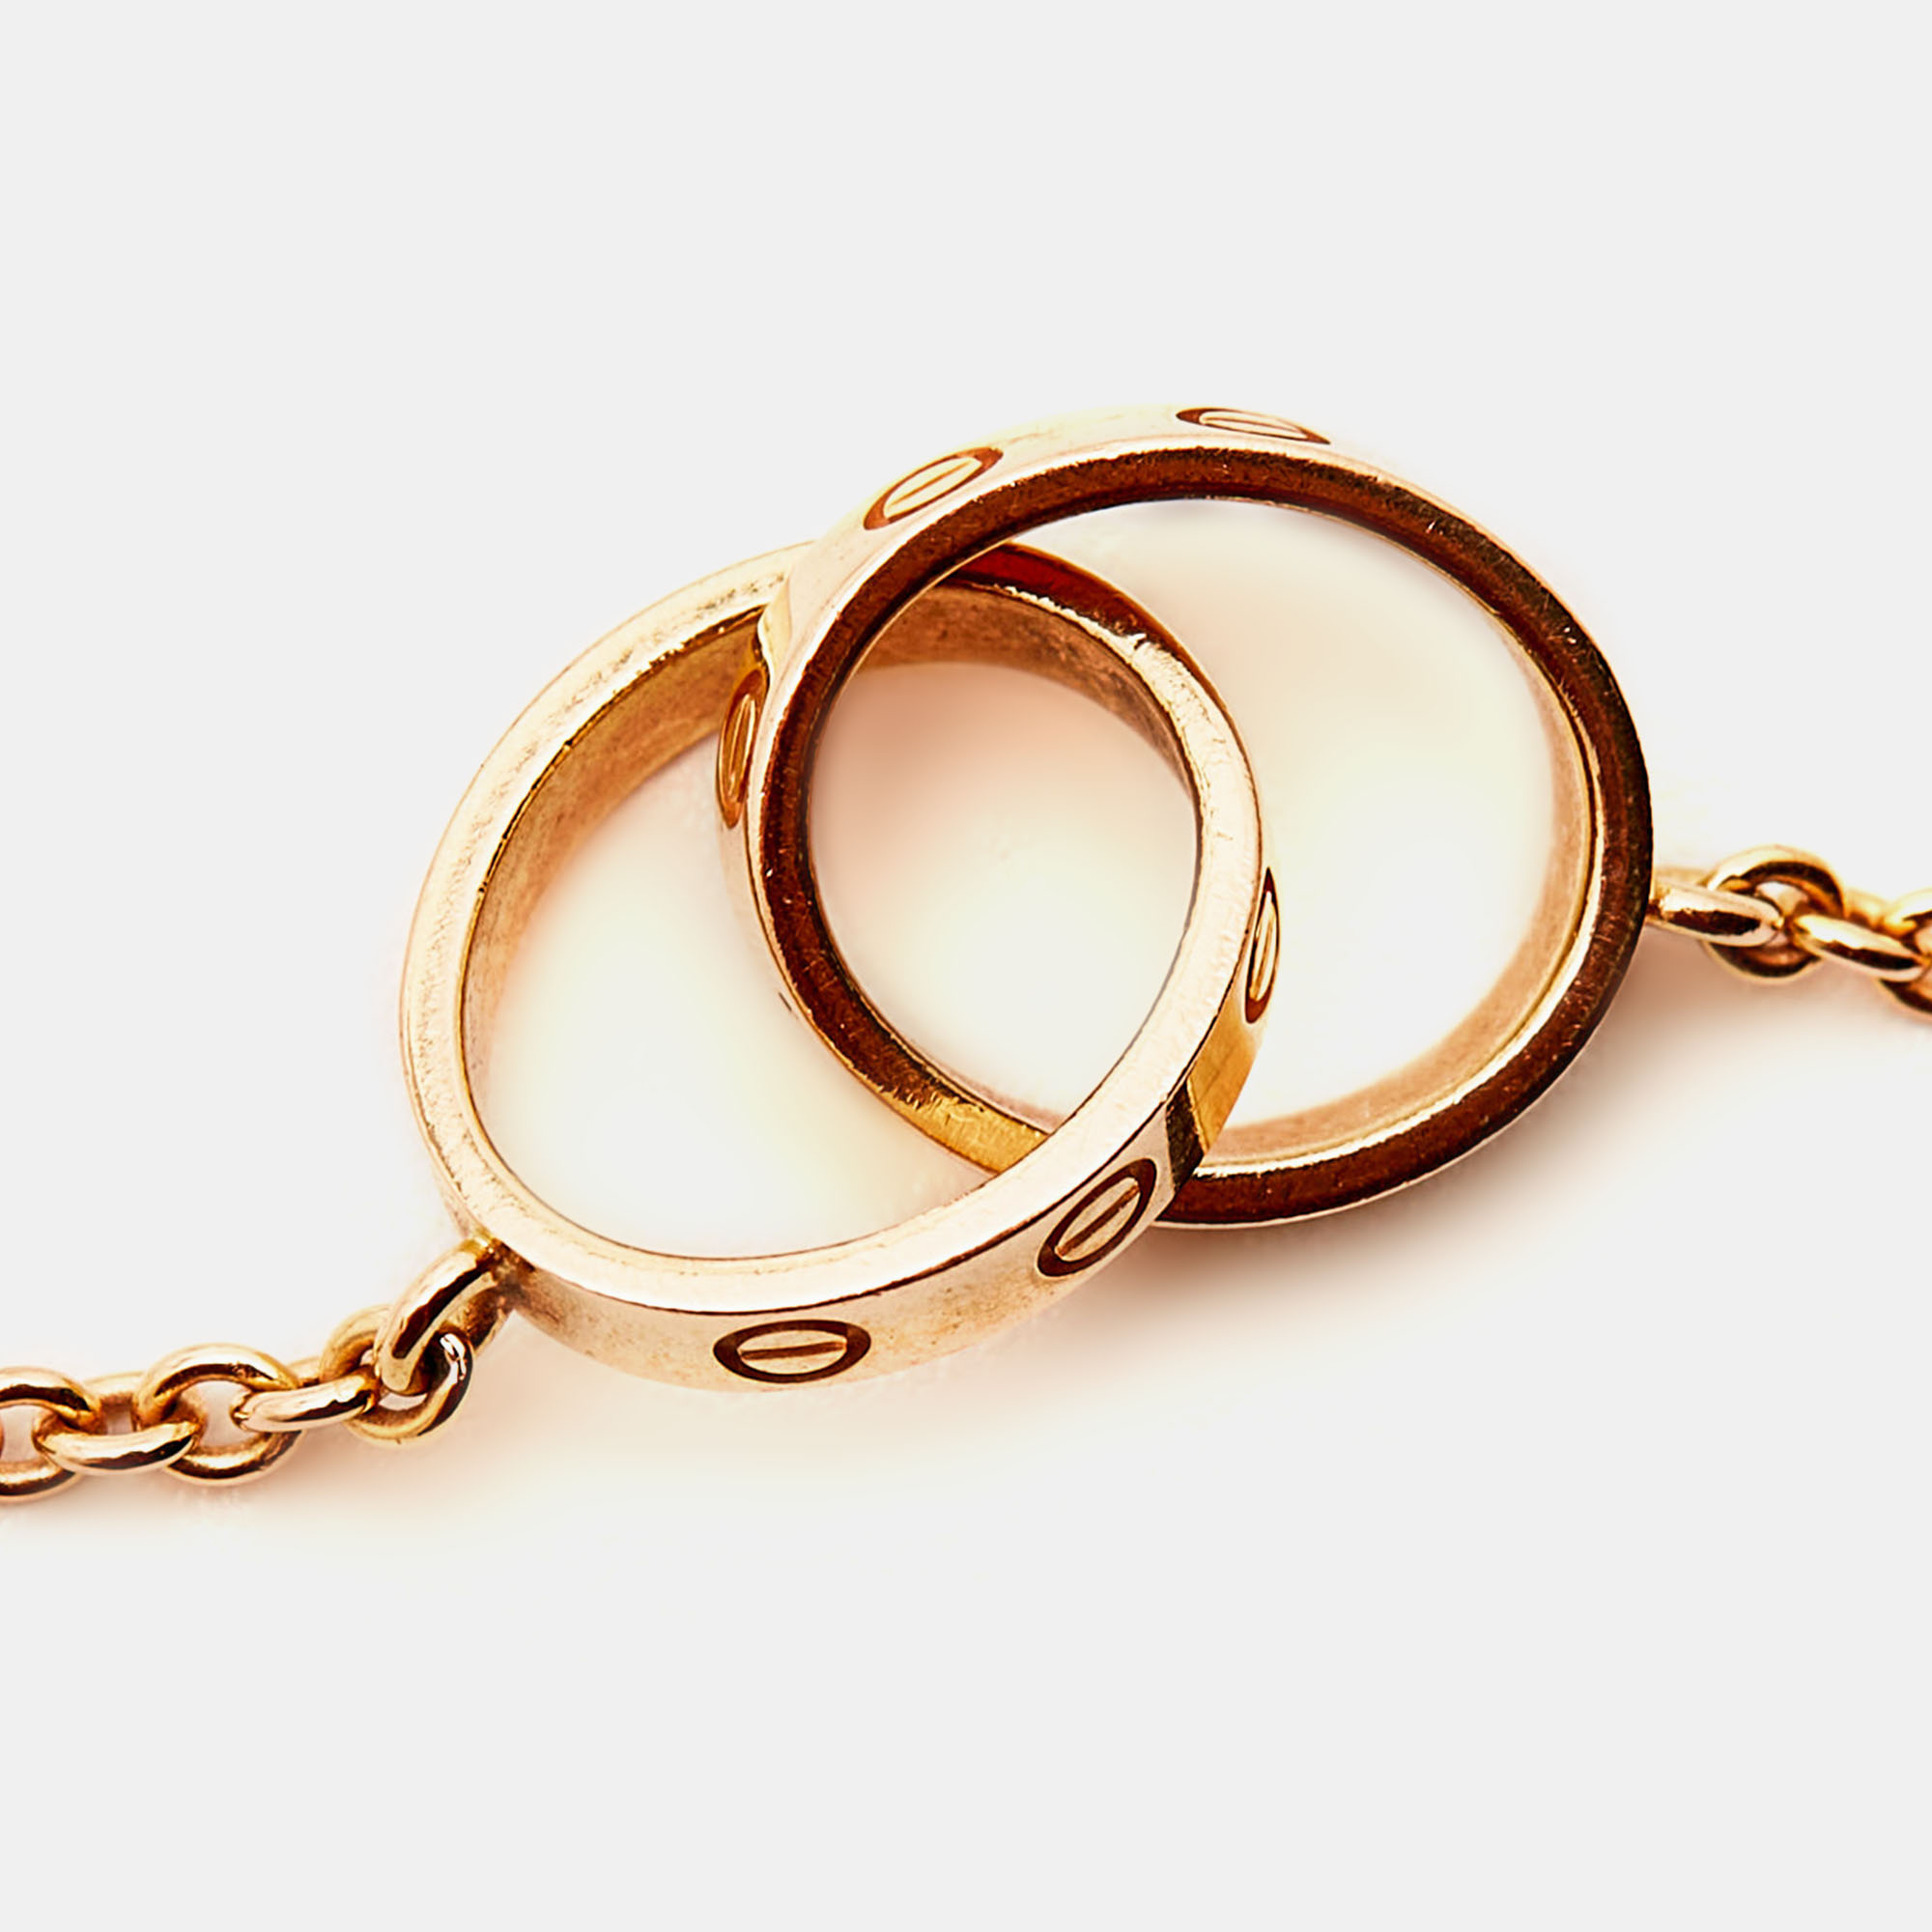 Cartier Love Interlocking Loops 18k Rose Gold Bracelet